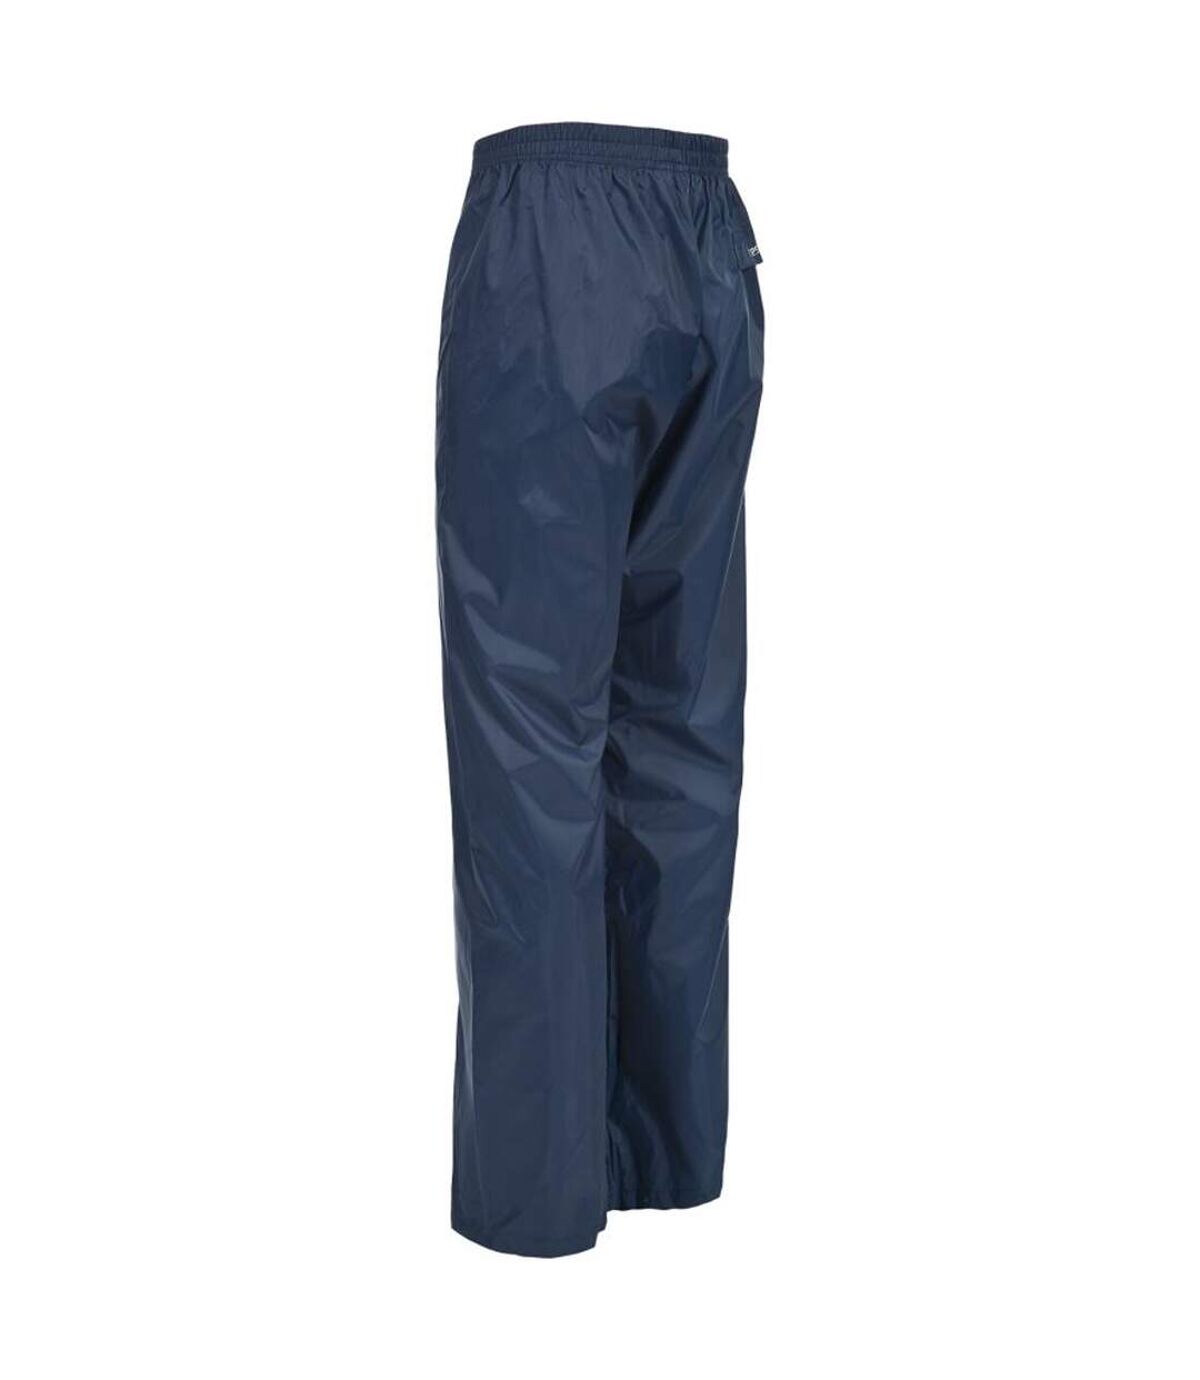 Trespass Packup - Pantalon imperméable - Homme (Bleu marine) - UTTP1335